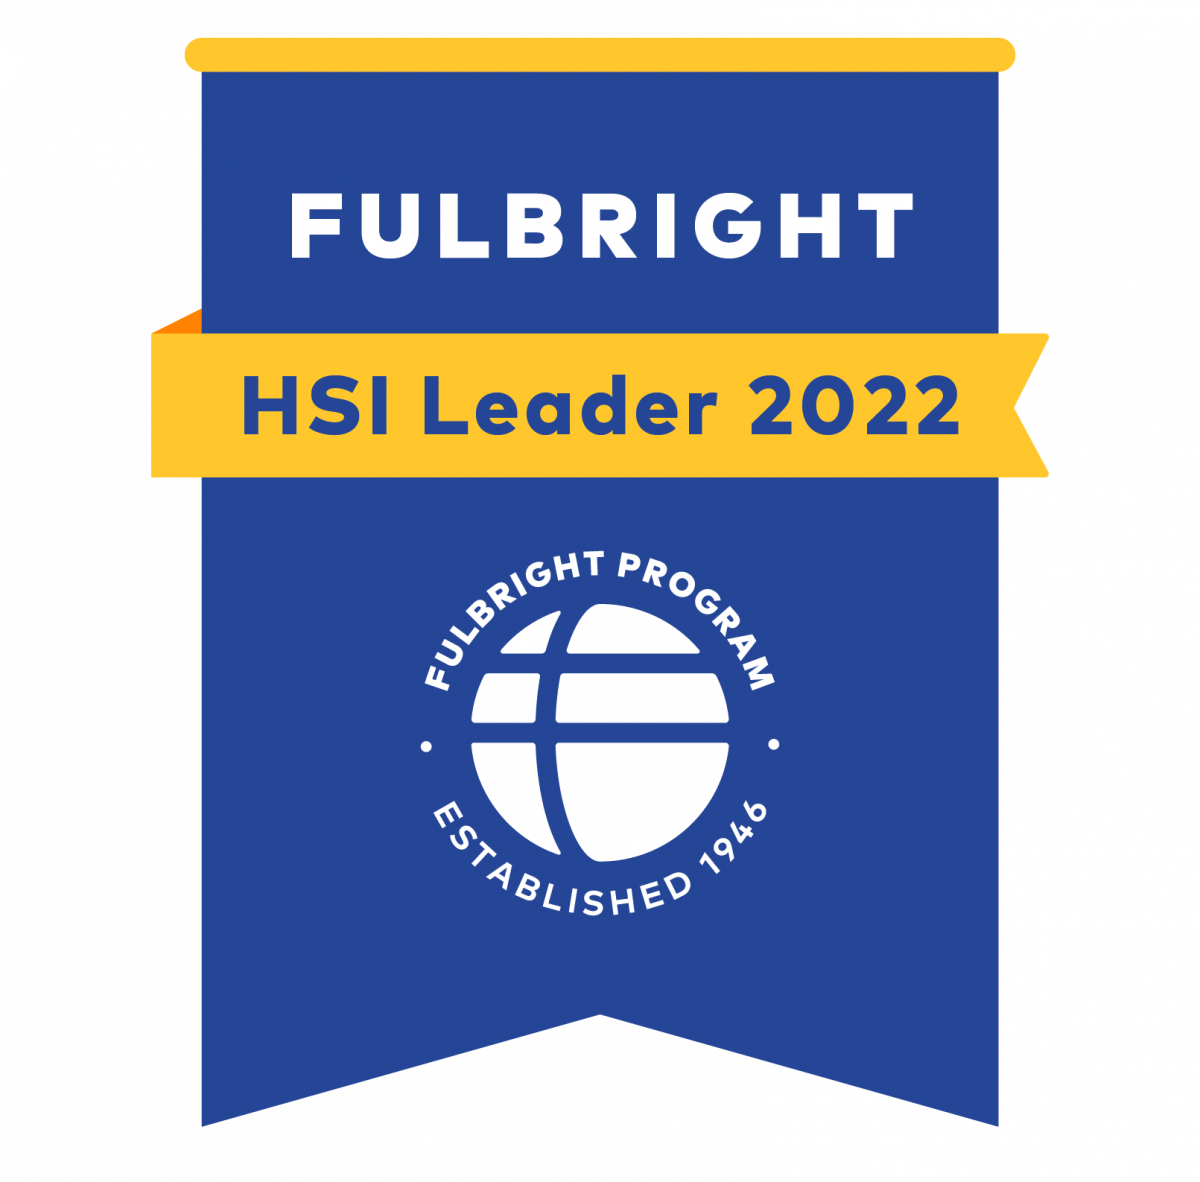 Fulbright HSI Badge 2022